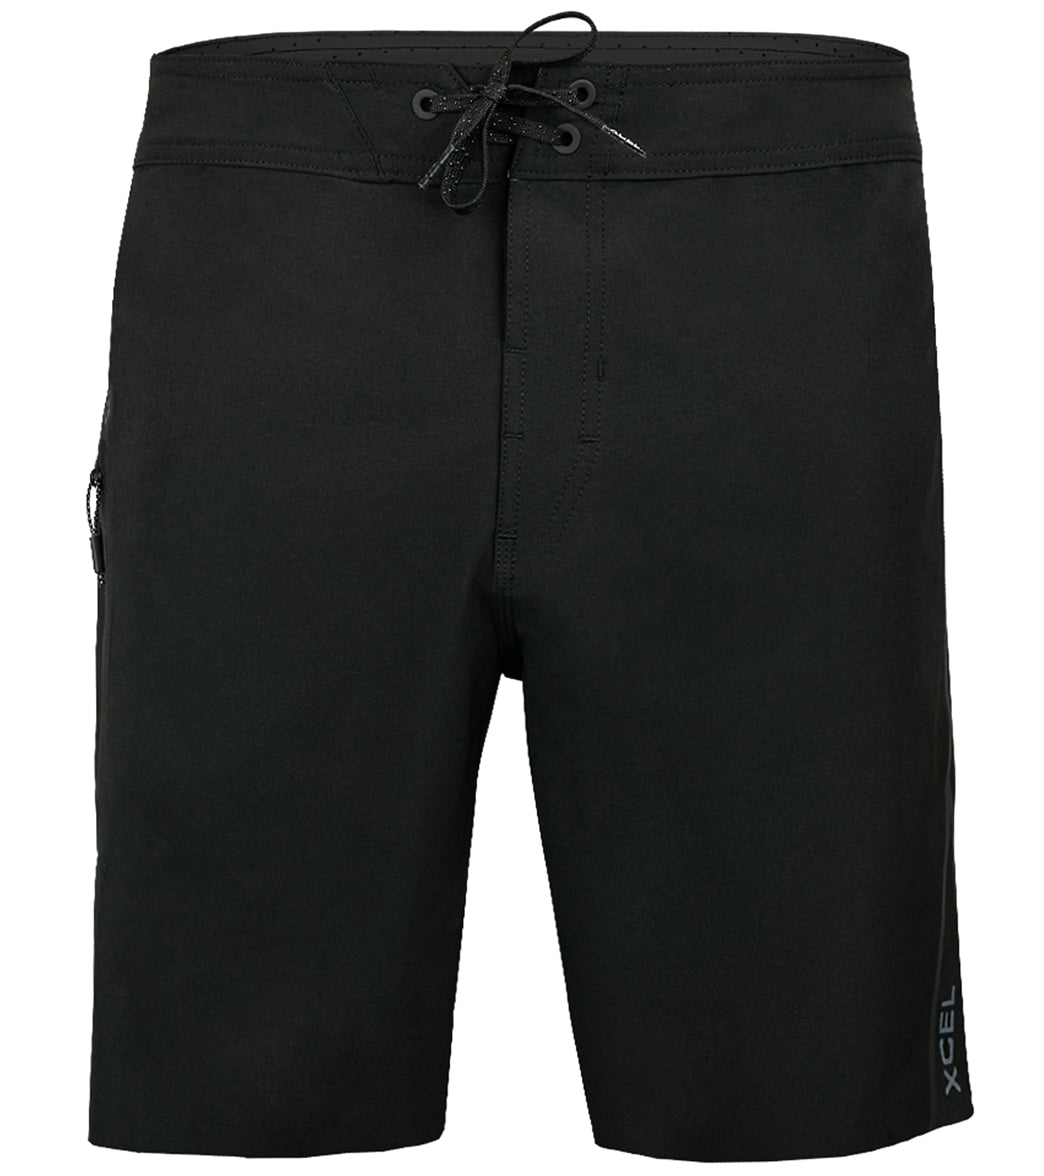 Xcel Men's Drylock 18.5 Boardshorts - Black 28 - Swimoutlet.com